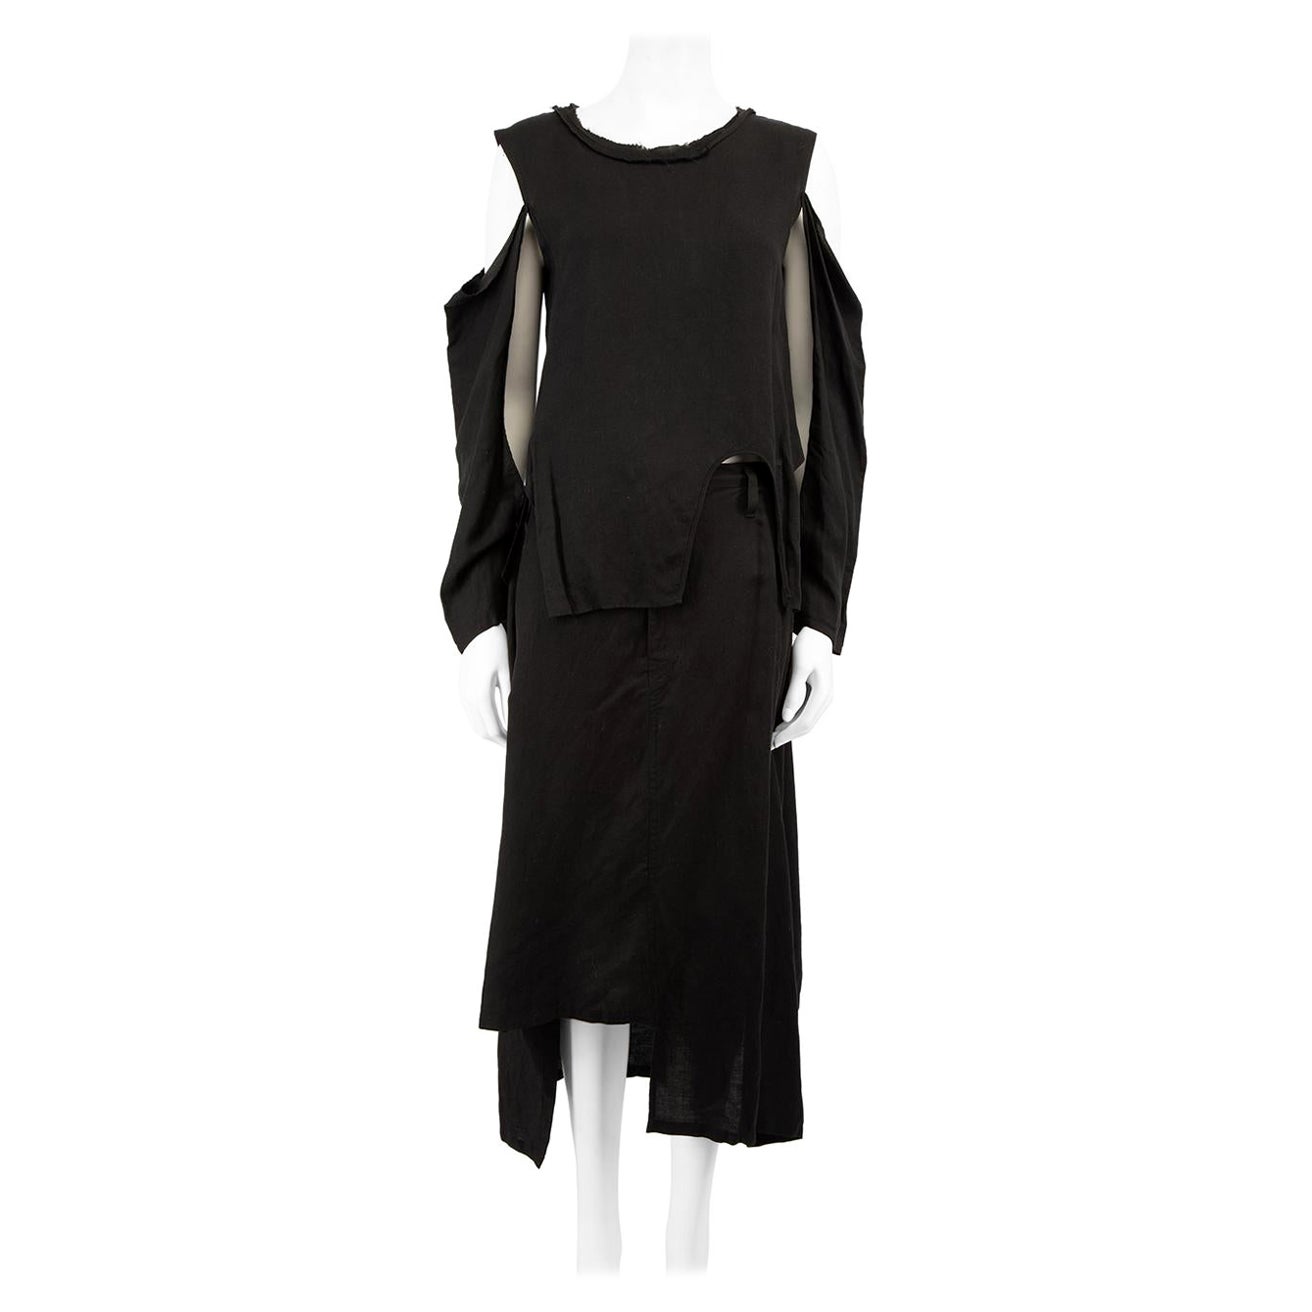 Yohji Yamamoto Black Asymmetric Top & Skirt Set Size S